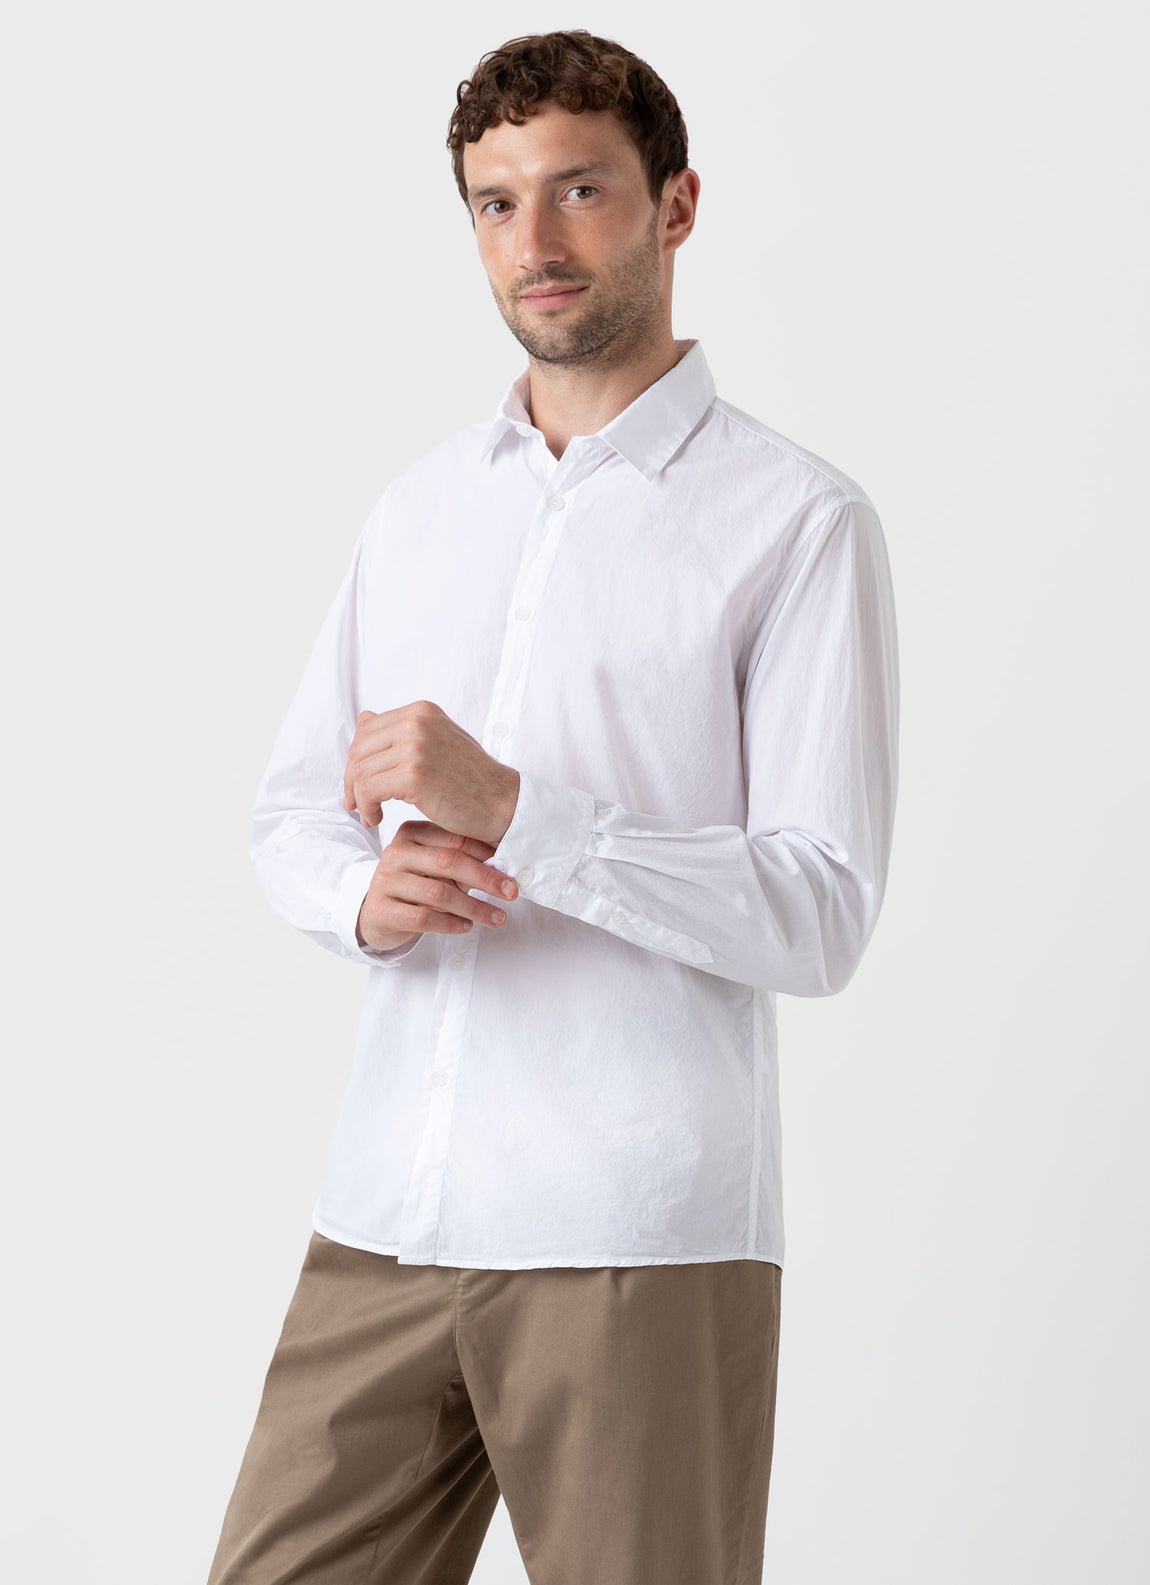 Men's Lightweight Poplin Shirt in White | Sunspel